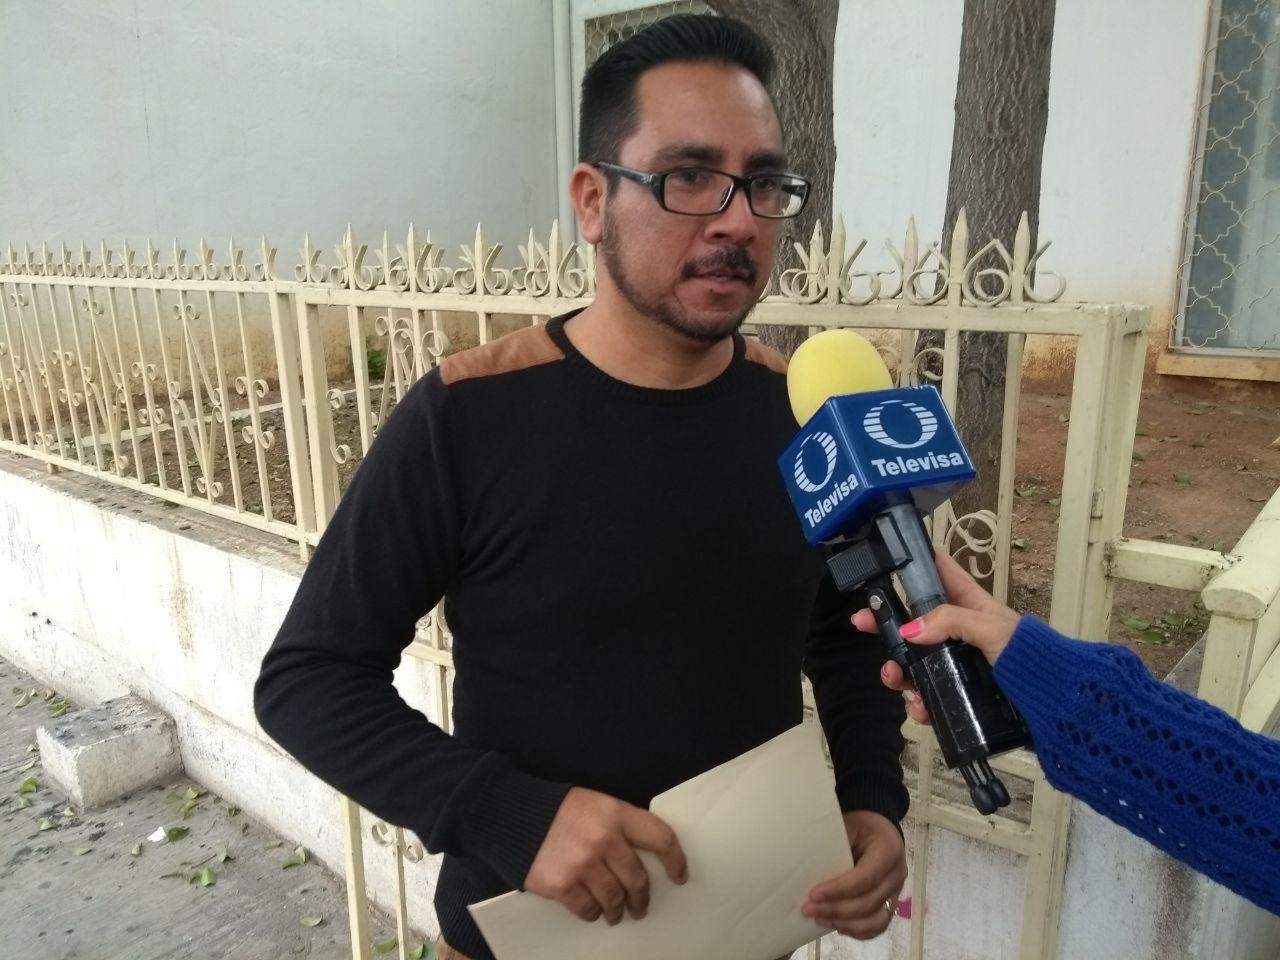 Presentan queja contra alcalde de Torreón por discriminación